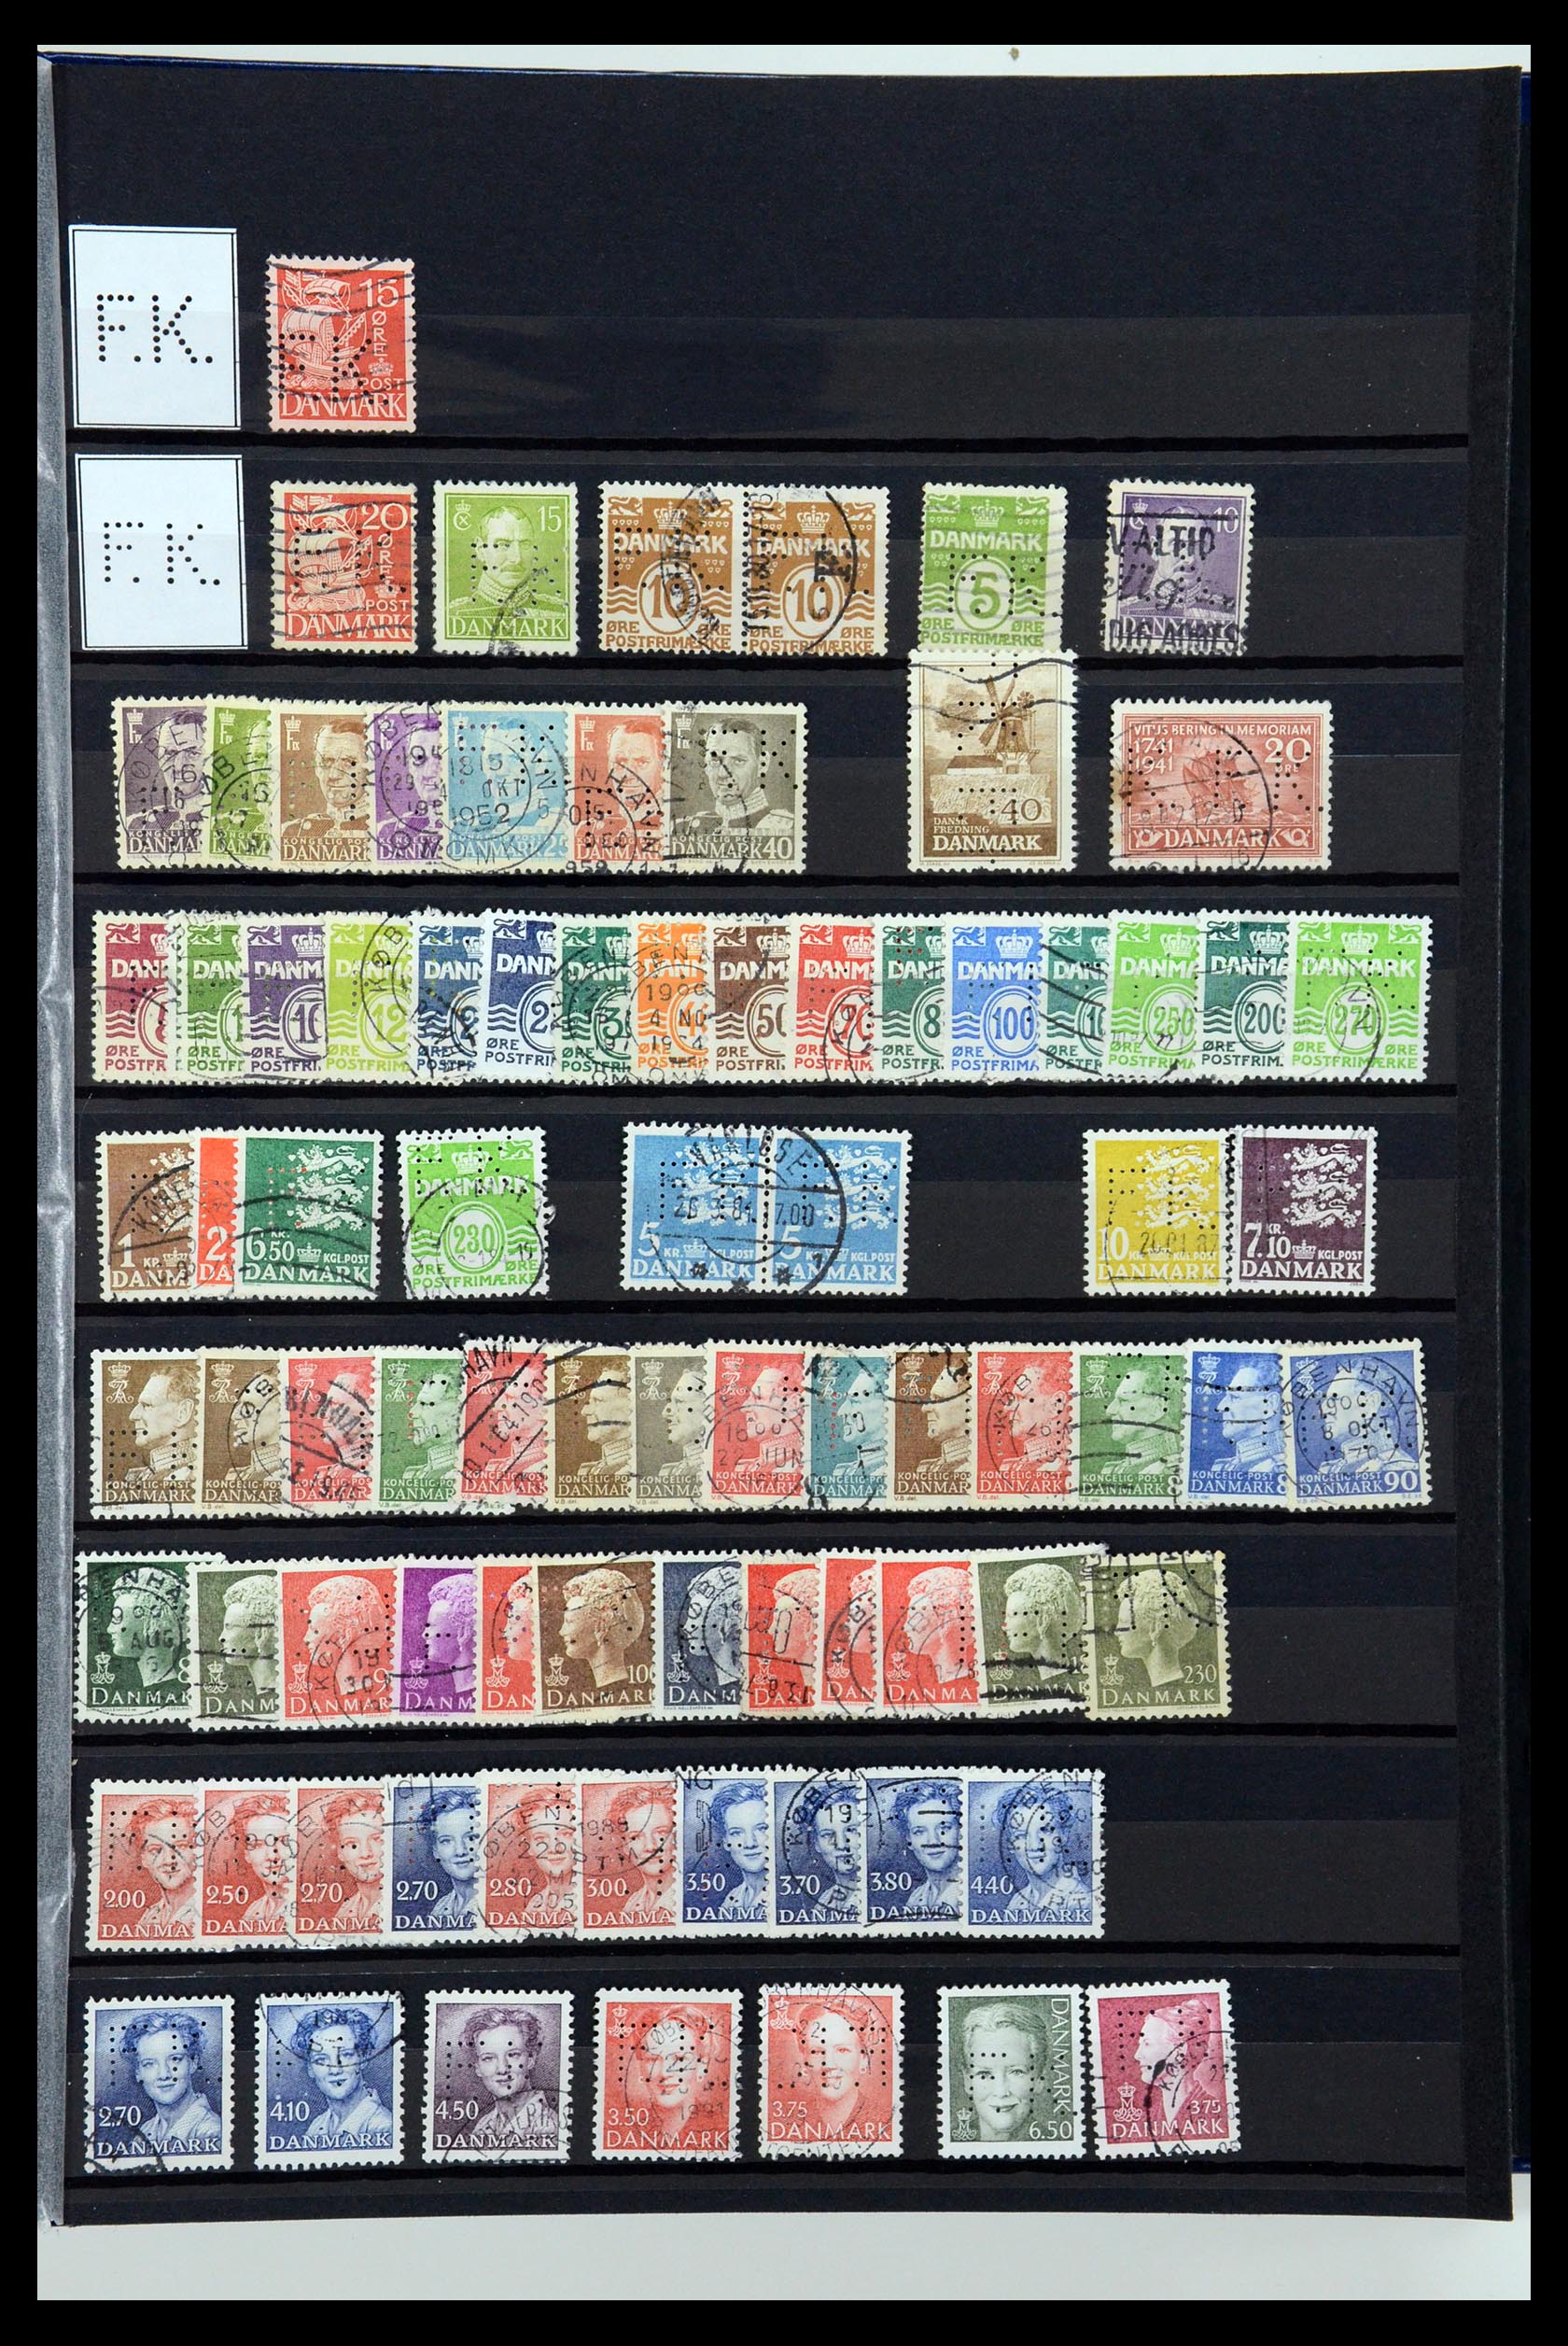 36396 052 - Stamp collection 36396 Denmark perfins.